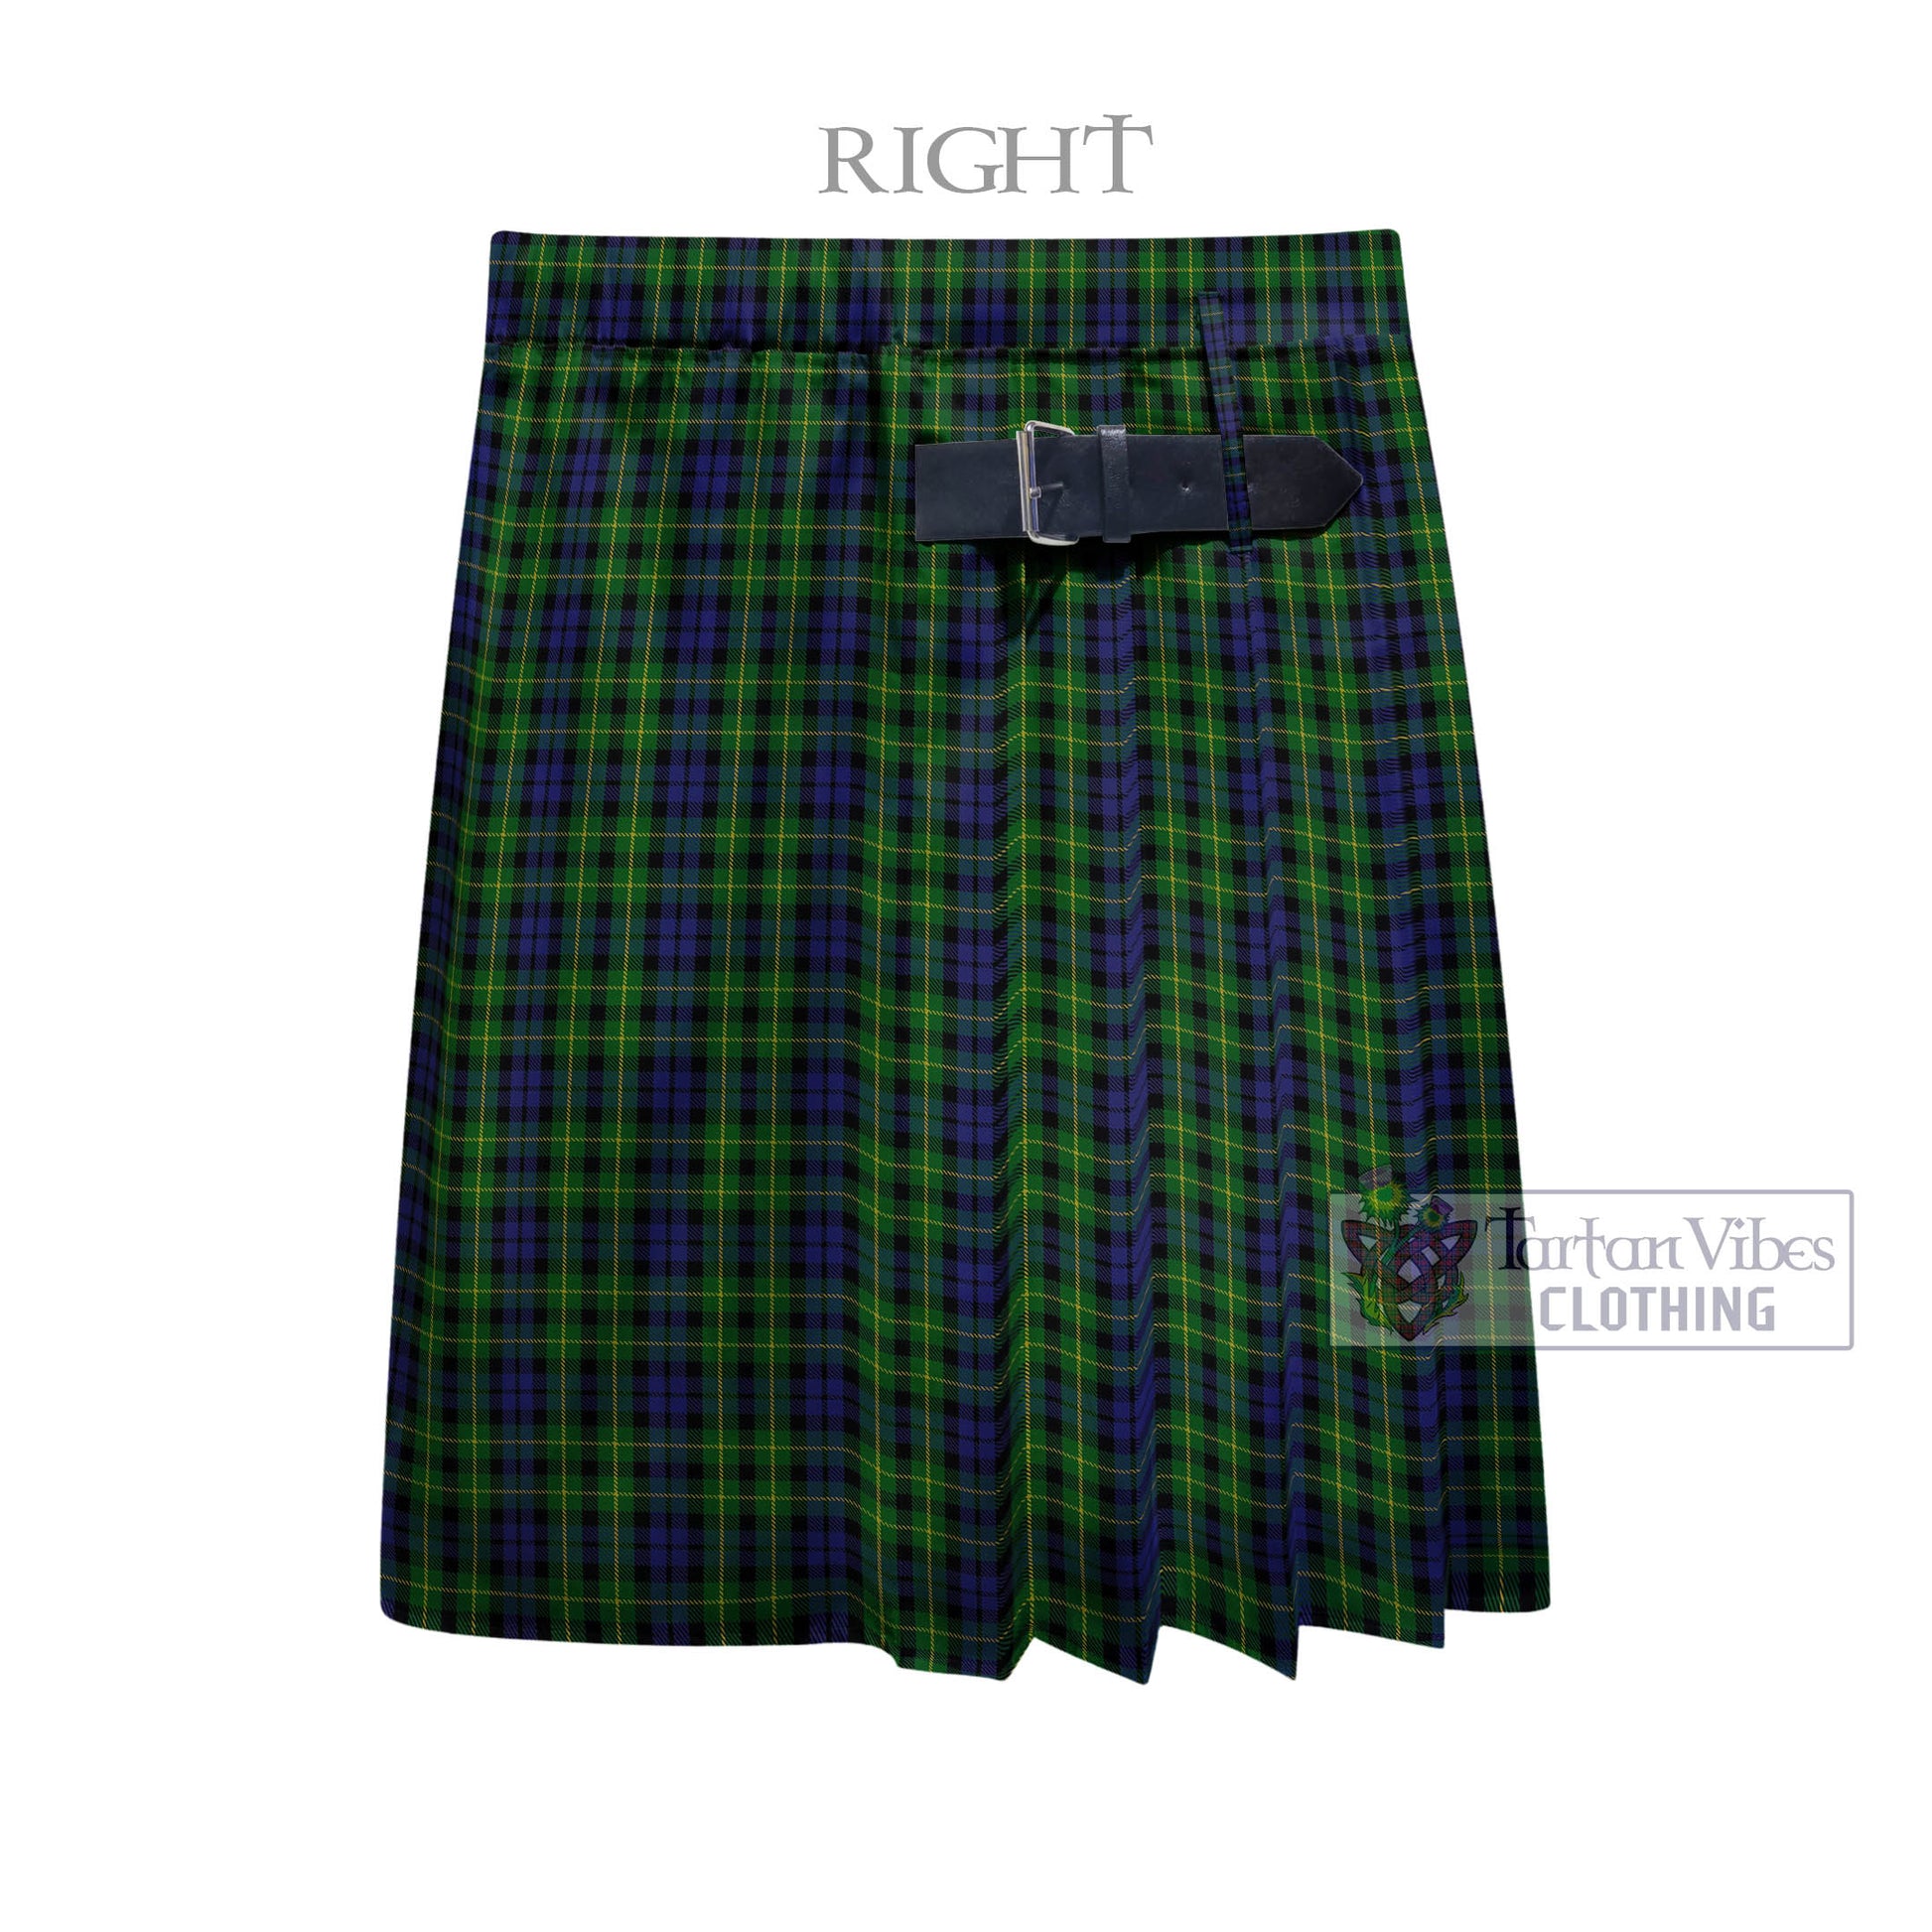 Tartan Vibes Clothing Campbell of Breadalbane Tartan Men's Pleated Skirt - Fashion Casual Retro Scottish Style